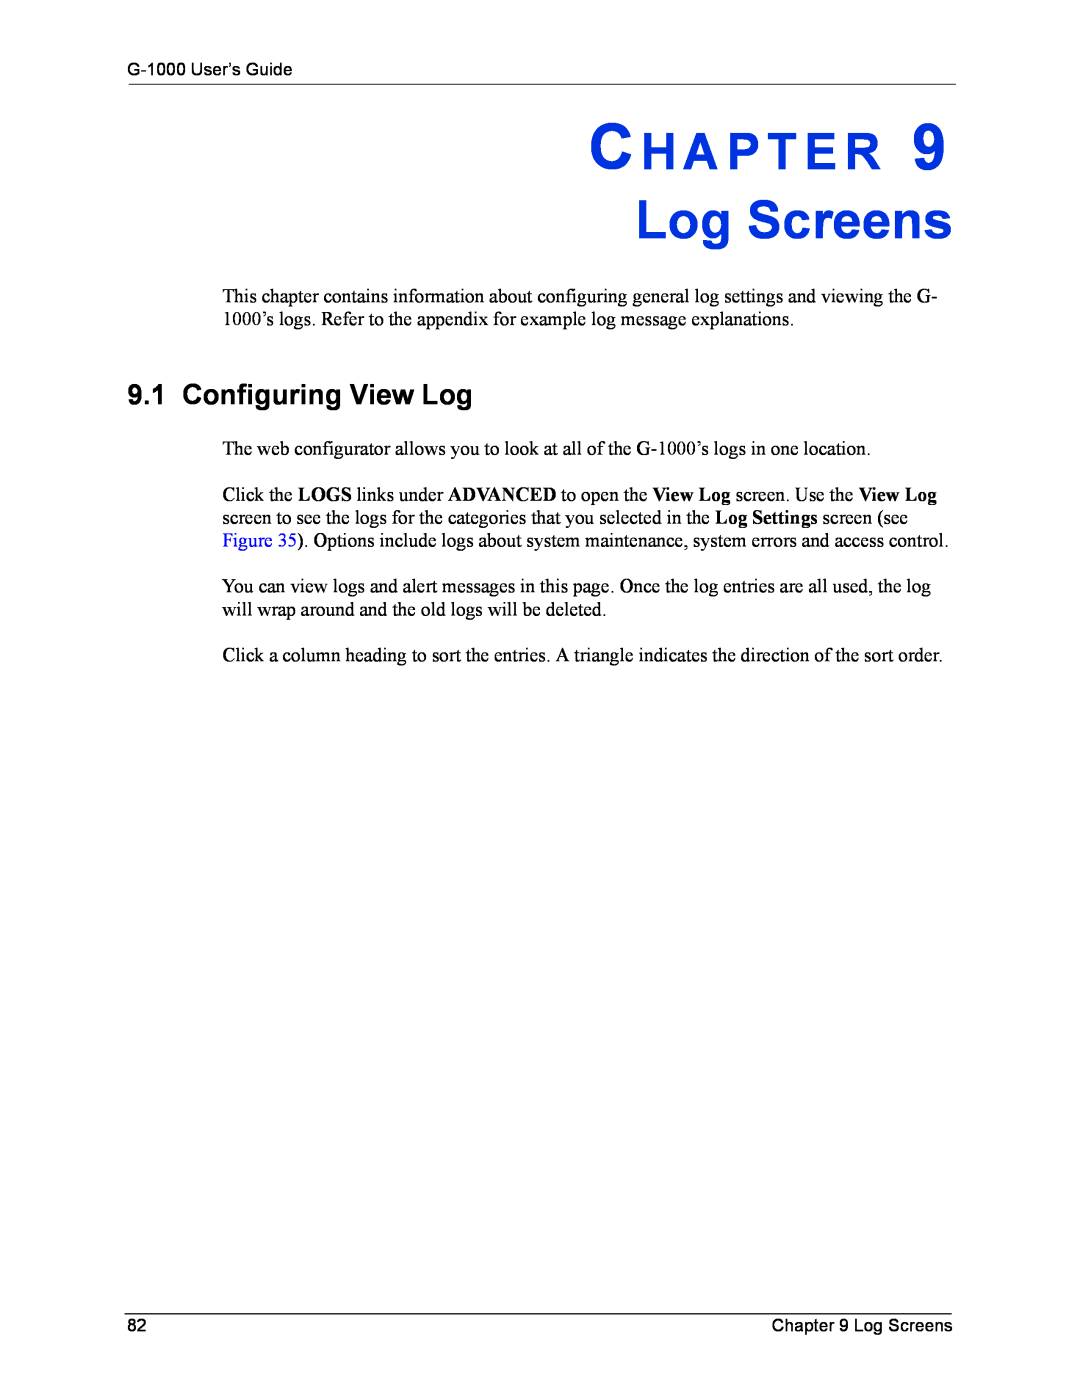 ZyXEL Communications G-1000 manual Log Screens, Configuring View Log, Ch A P T E R 